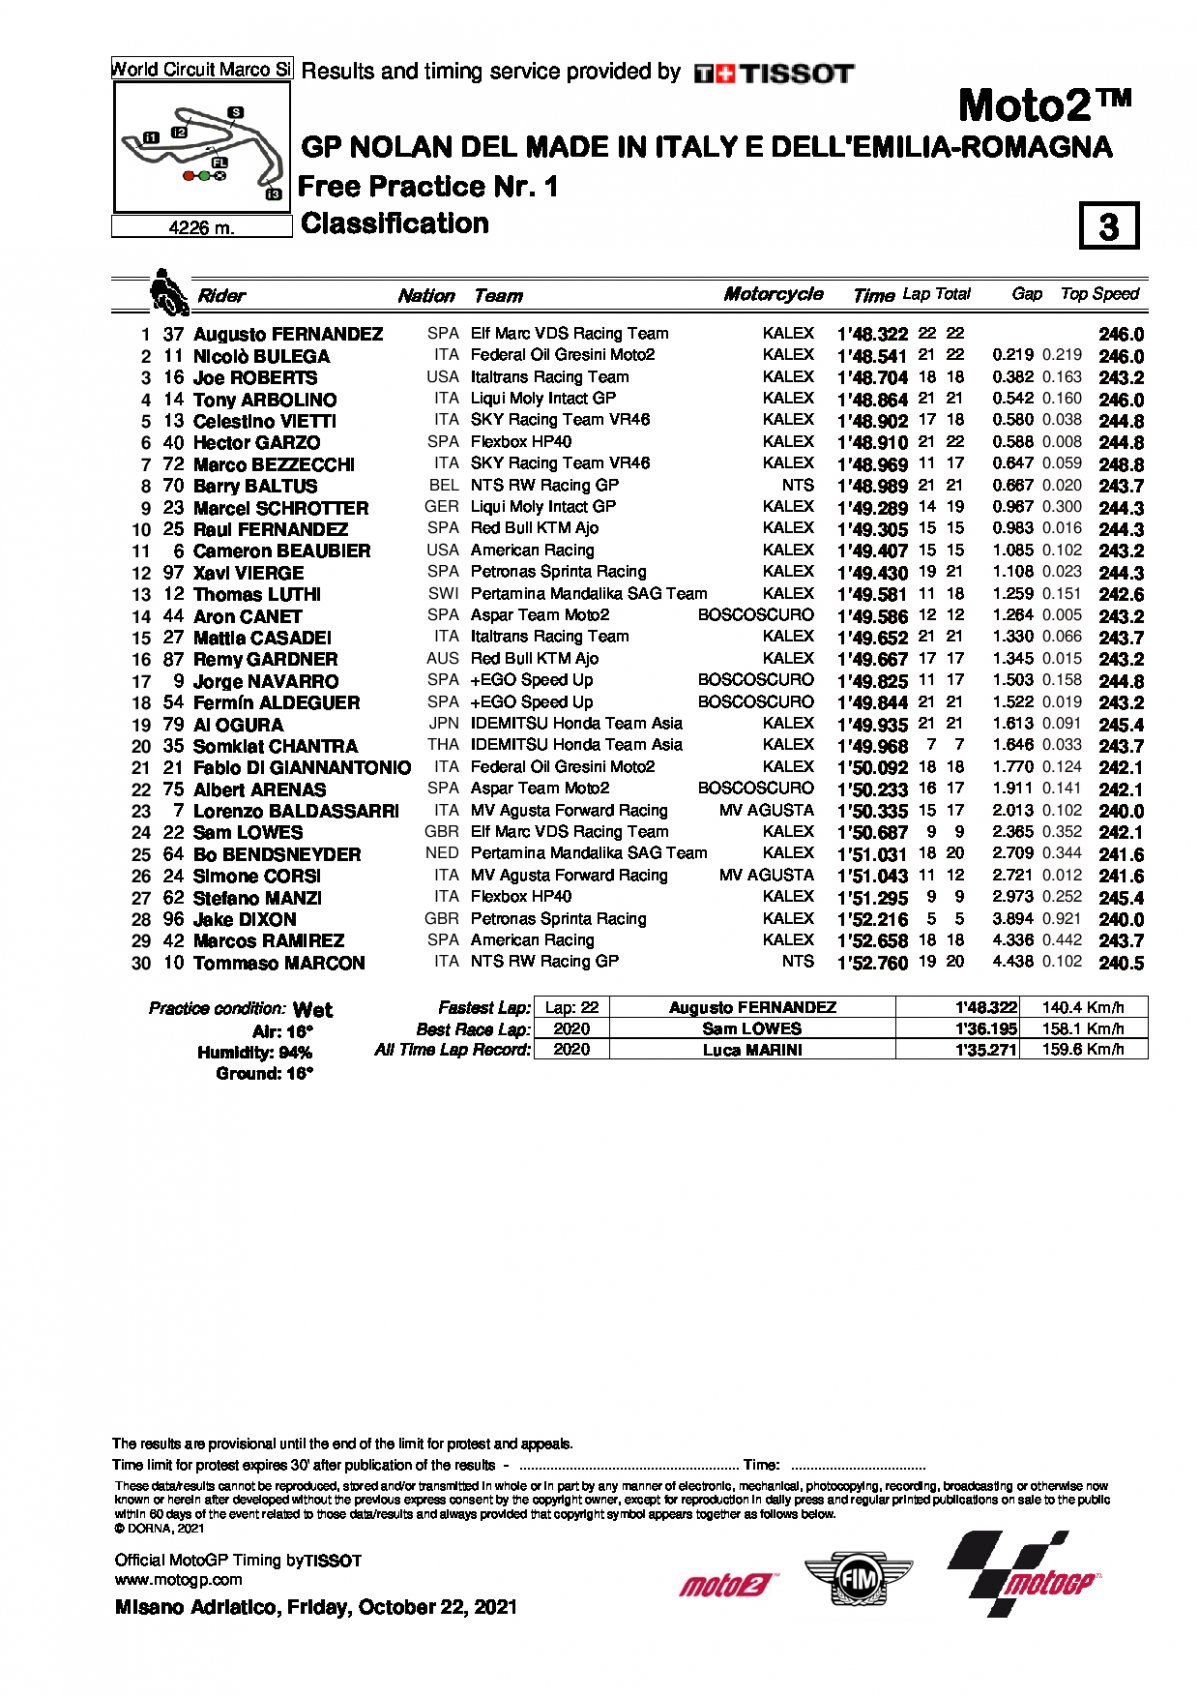 Результаты FP1 Гран-При Эмильи-Романьи, Moto2 (22/10/2021)